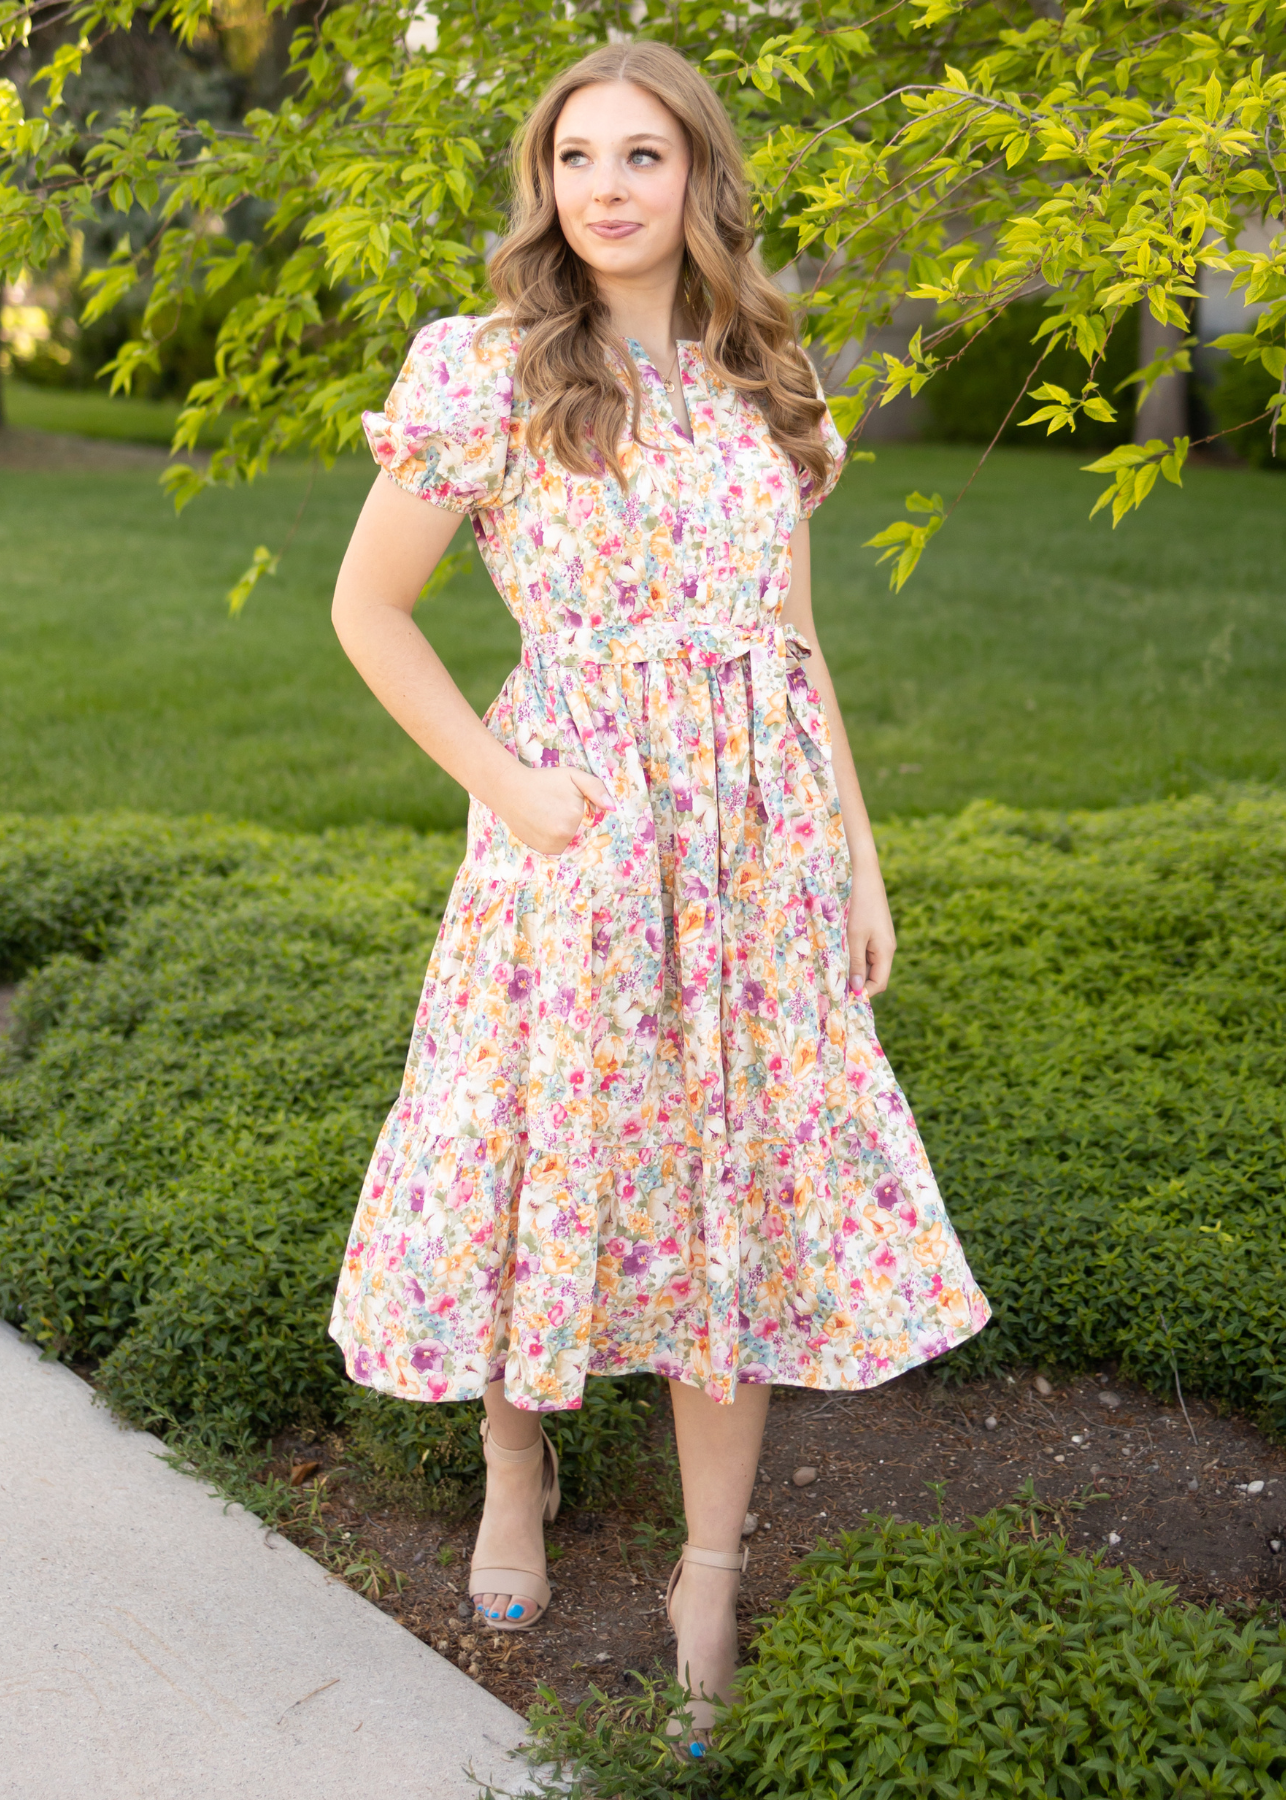 Short sleeve floral dress